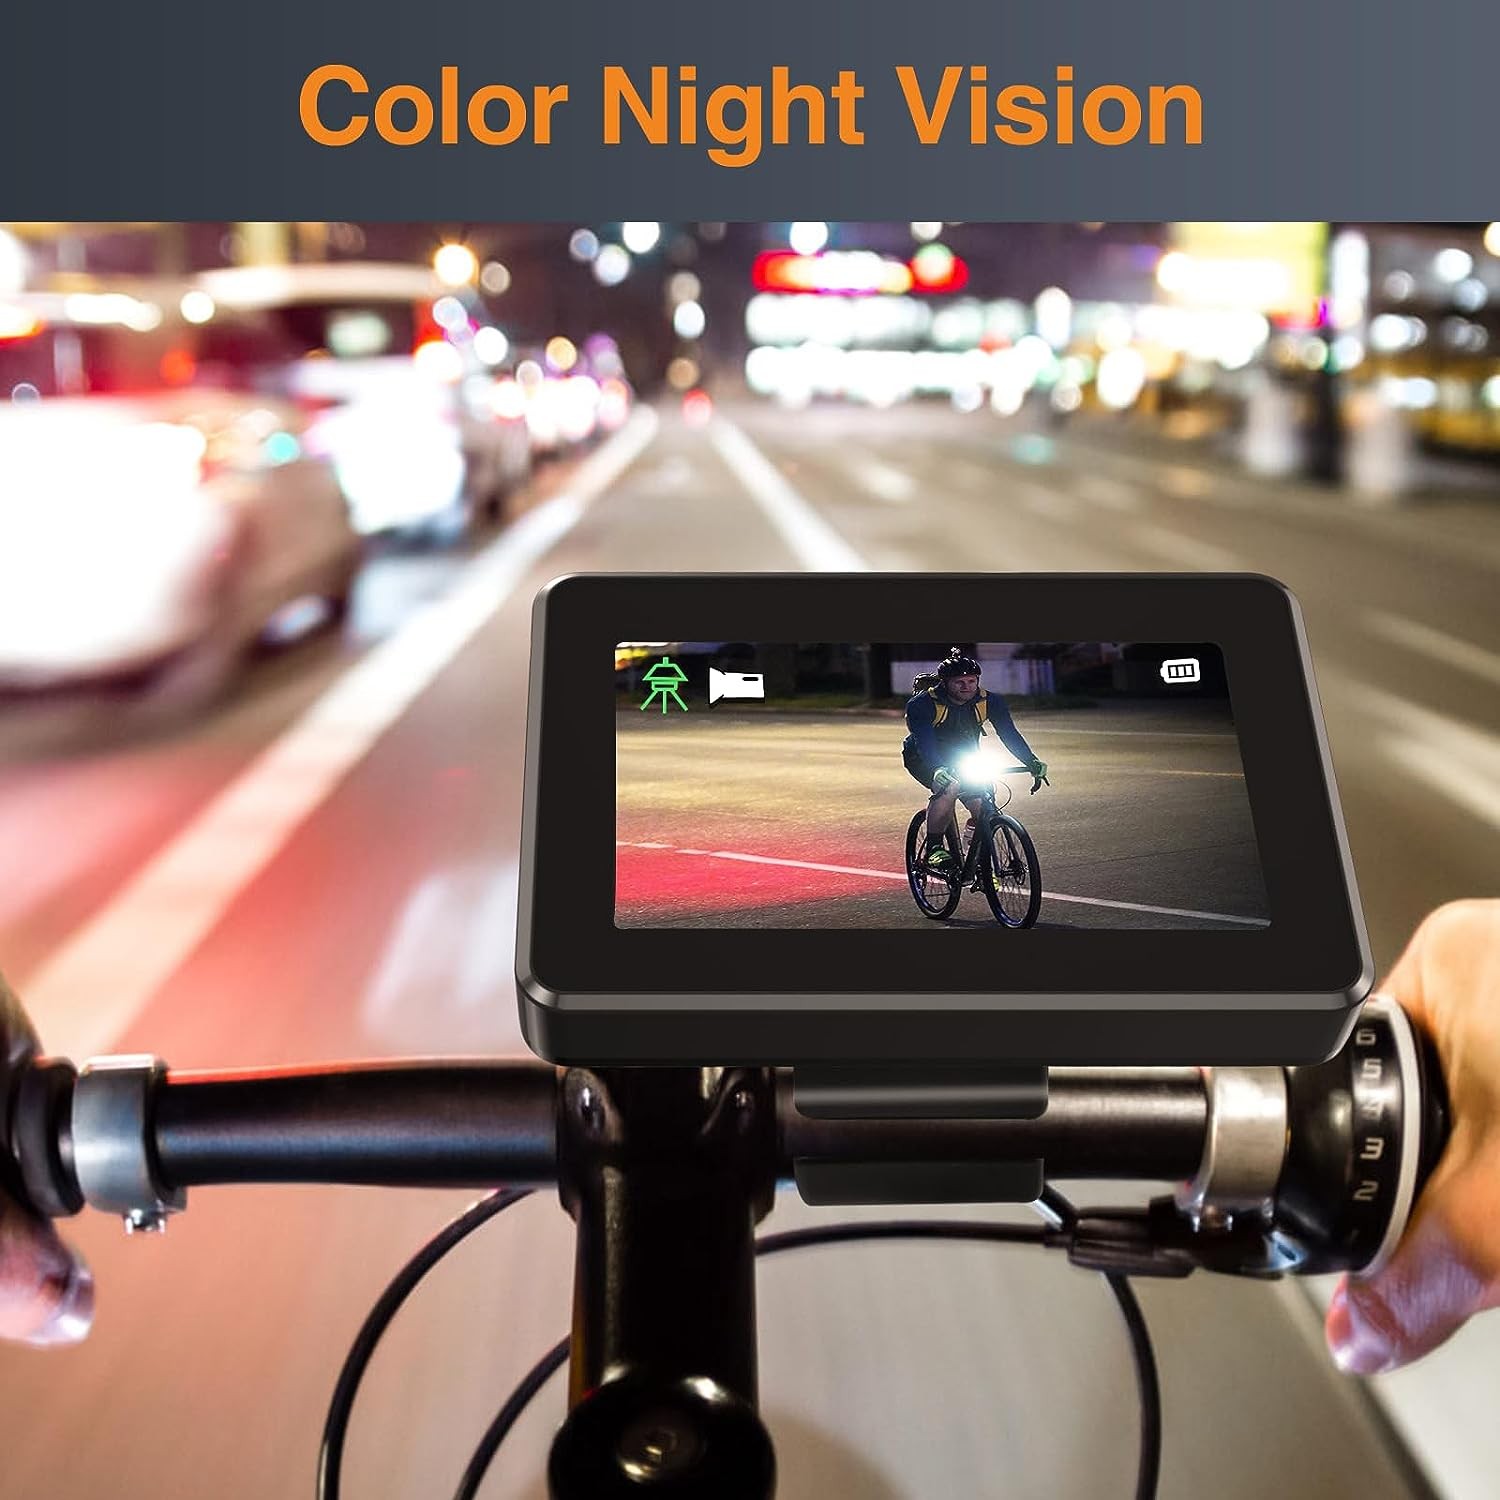 monitor sepeda diatur dengan kamera dengan penglihatan malam